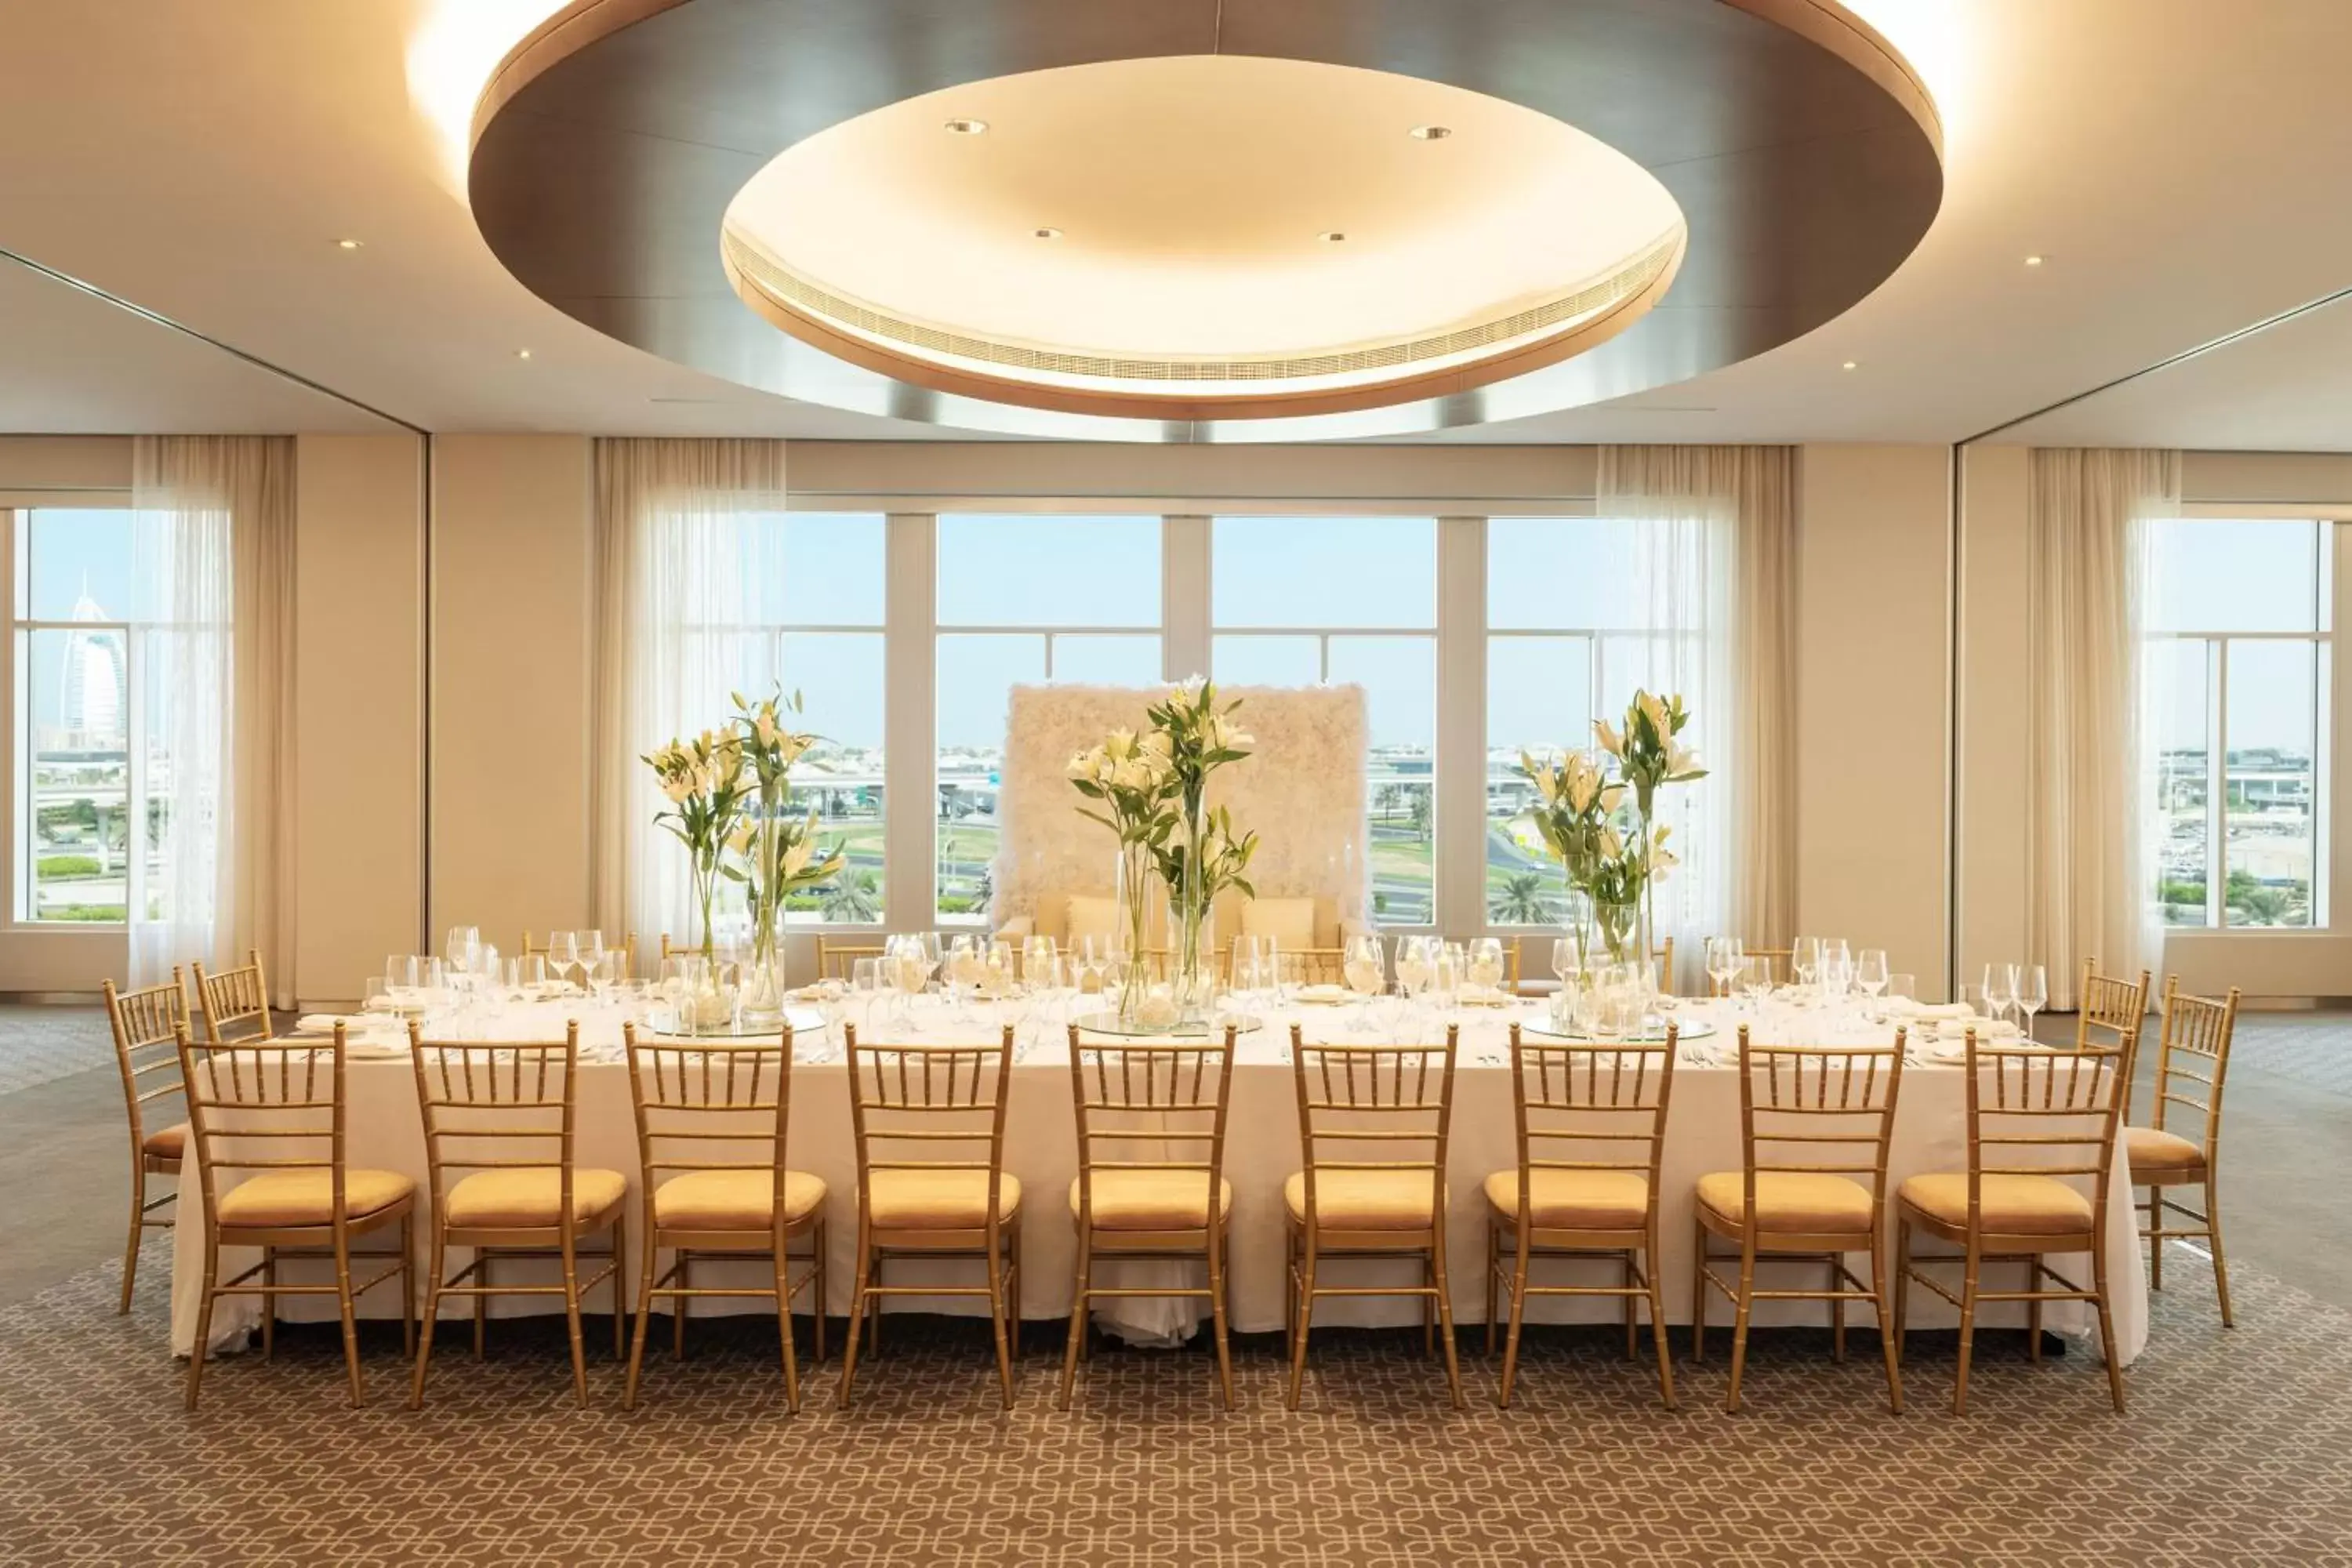 Banquet/Function facilities, Banquet Facilities in Sheraton Mall of the Emirates Hotel, Dubai